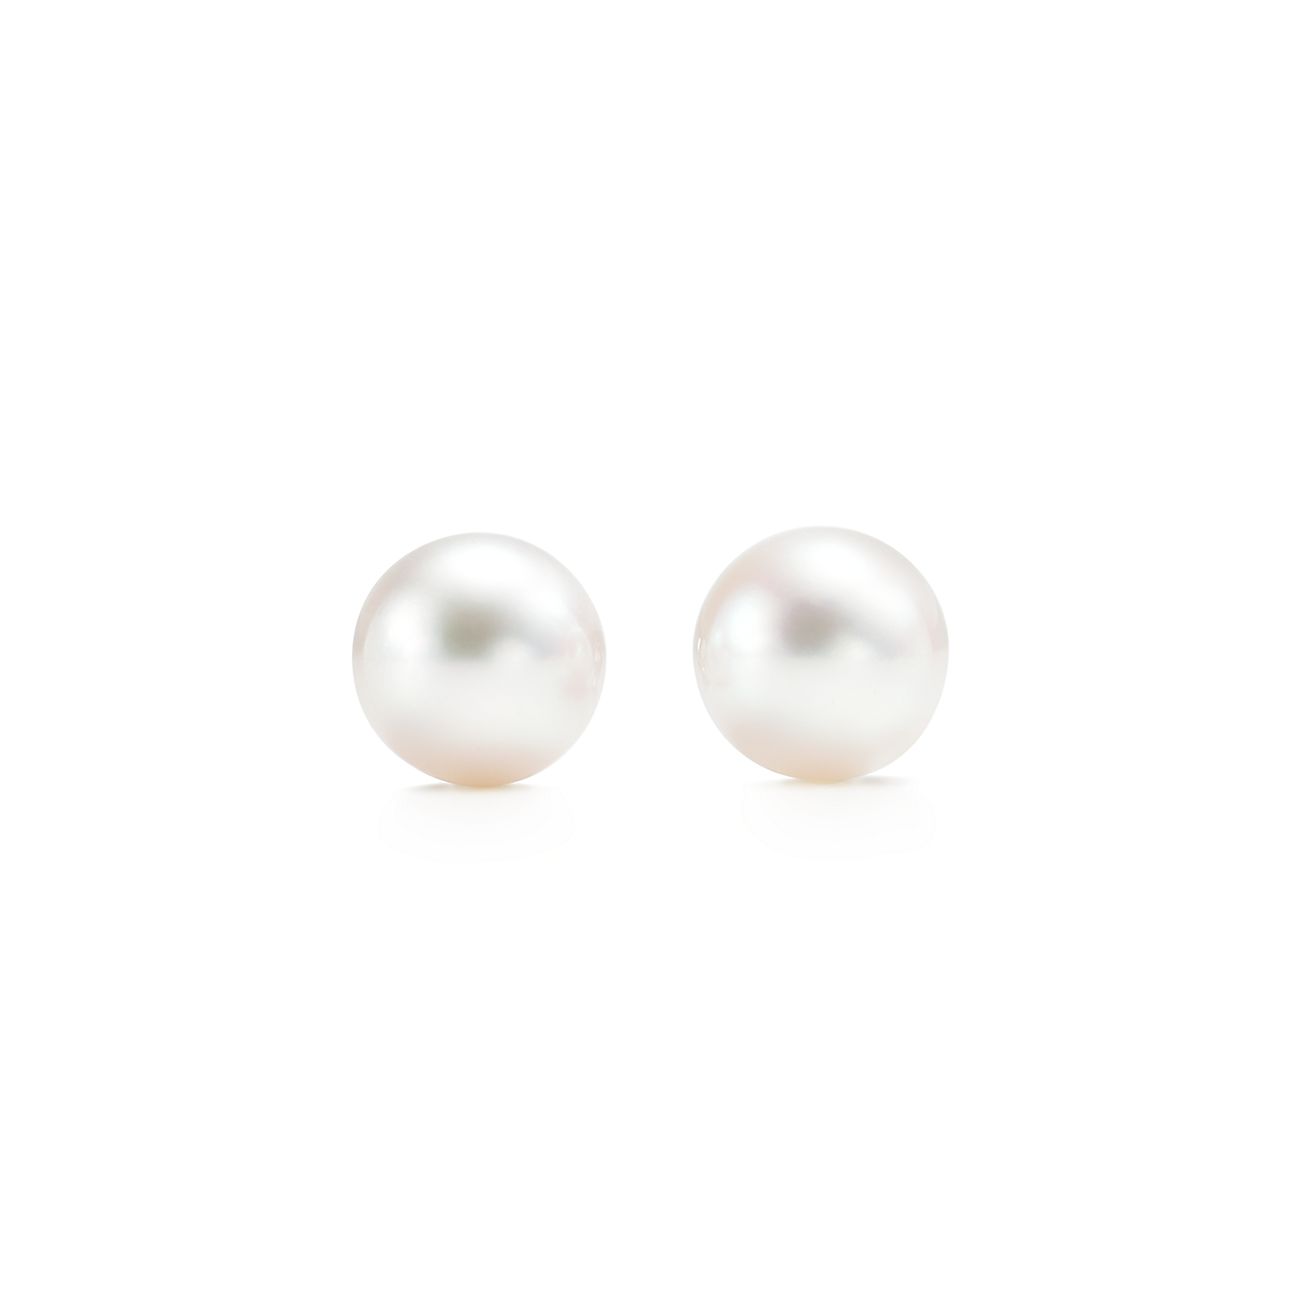 Tiffany Signature™ Pearls earrings of 